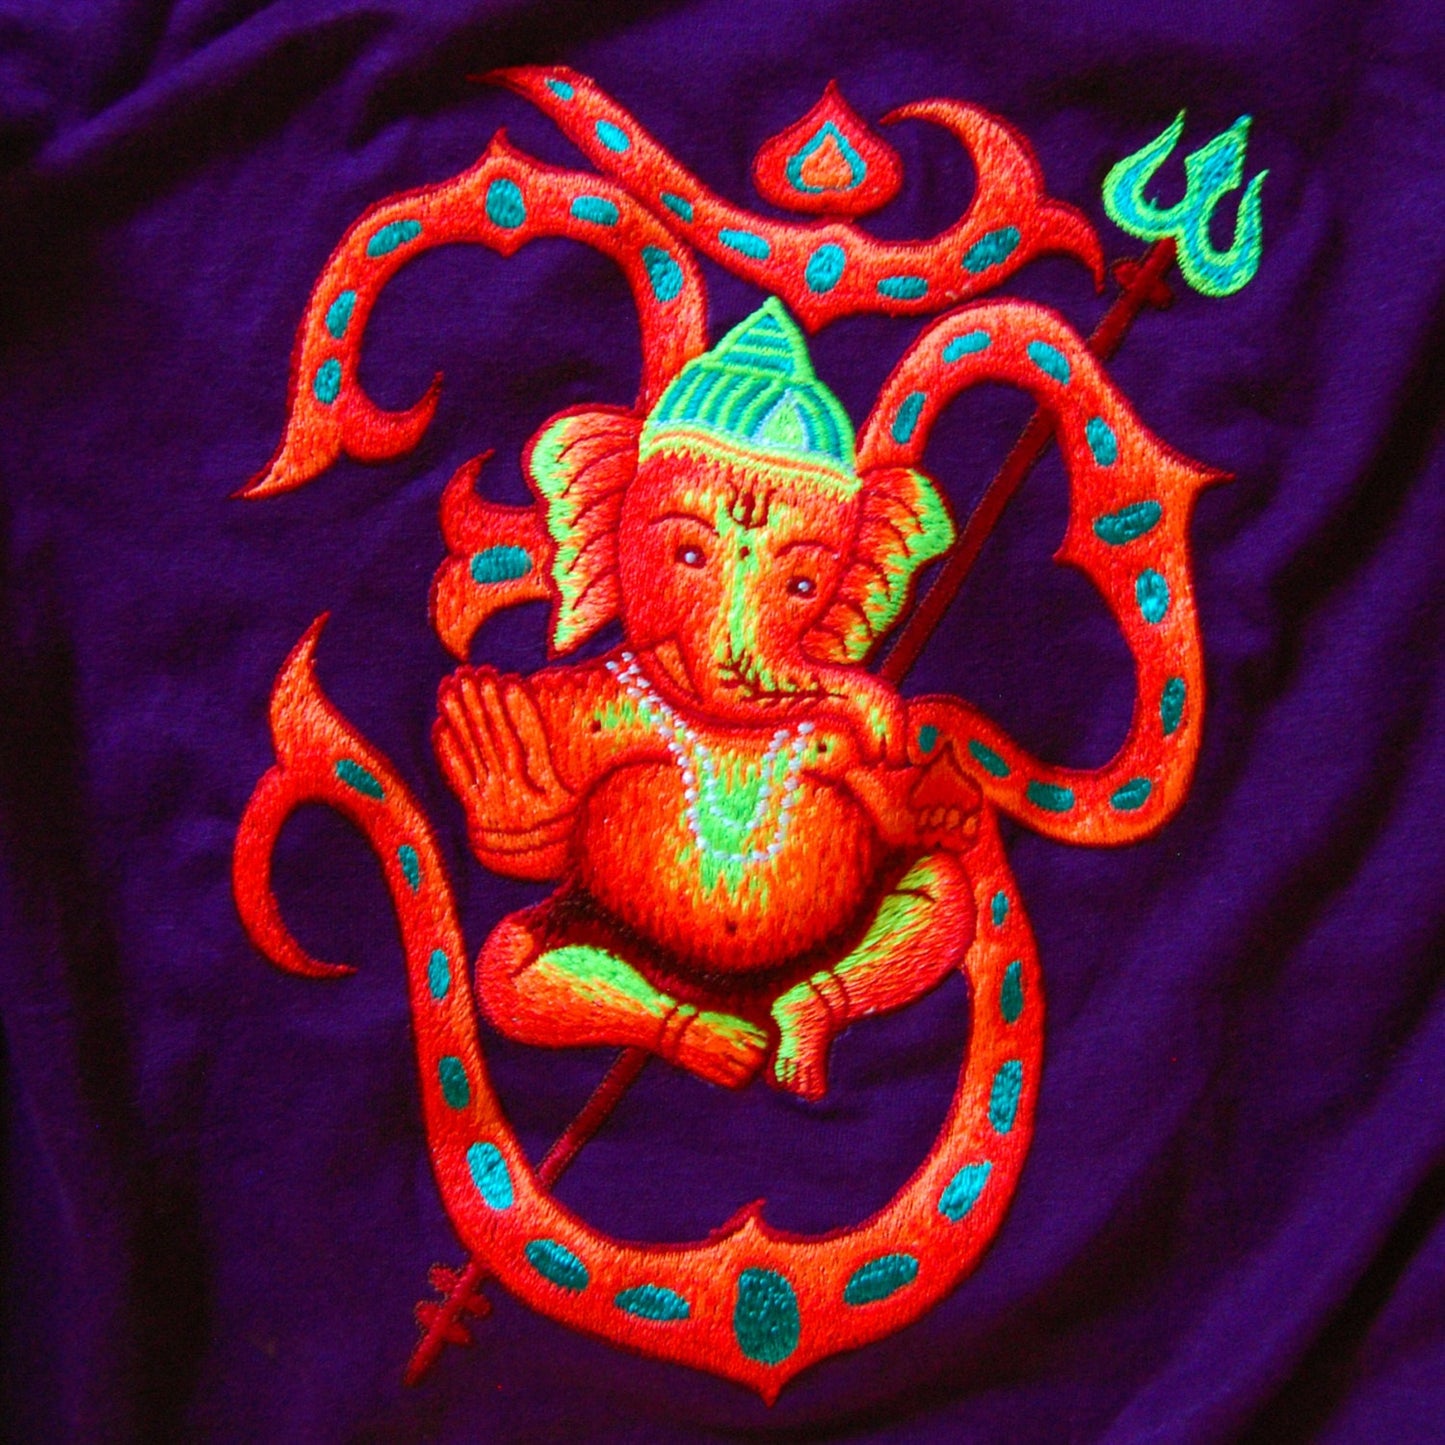 AUM Ganesha purple T-Shirt blacklight handmade embroidery no print psy shirt goa t-shirt